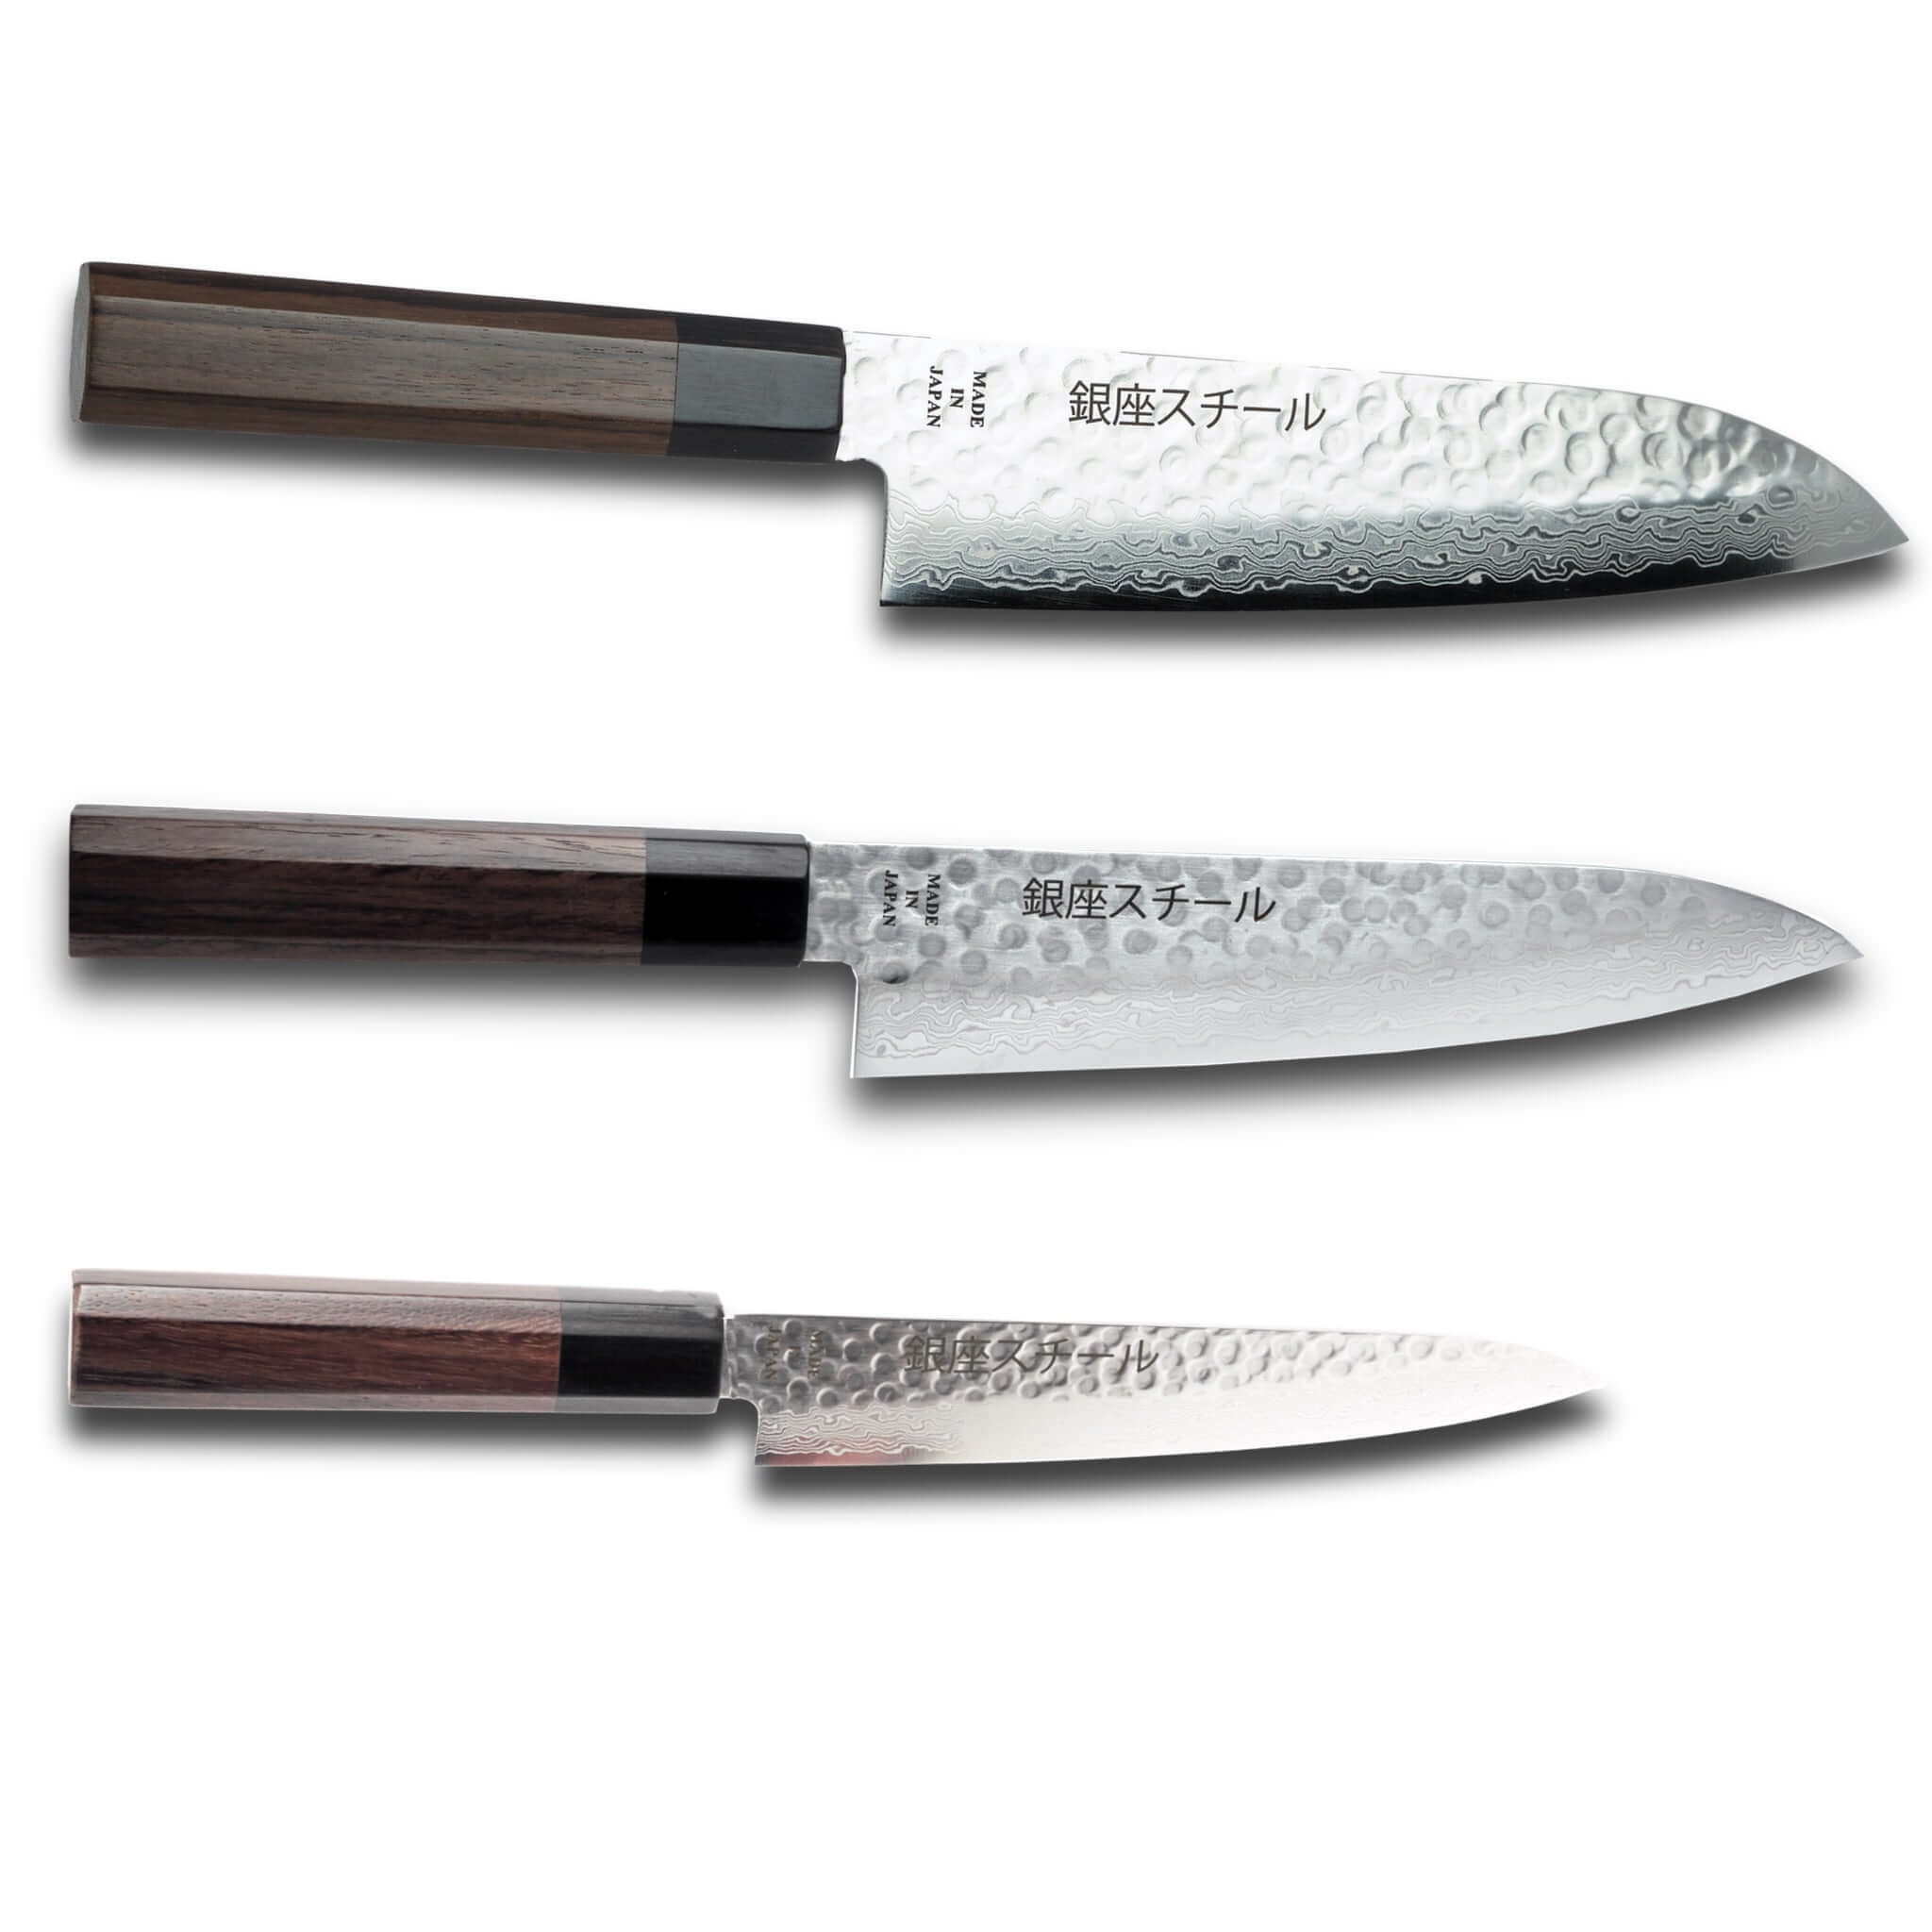 Japanese Chef Knife set, ginza steel knife set, Santoku knife, chef knife, petty knife, Japanese knife set